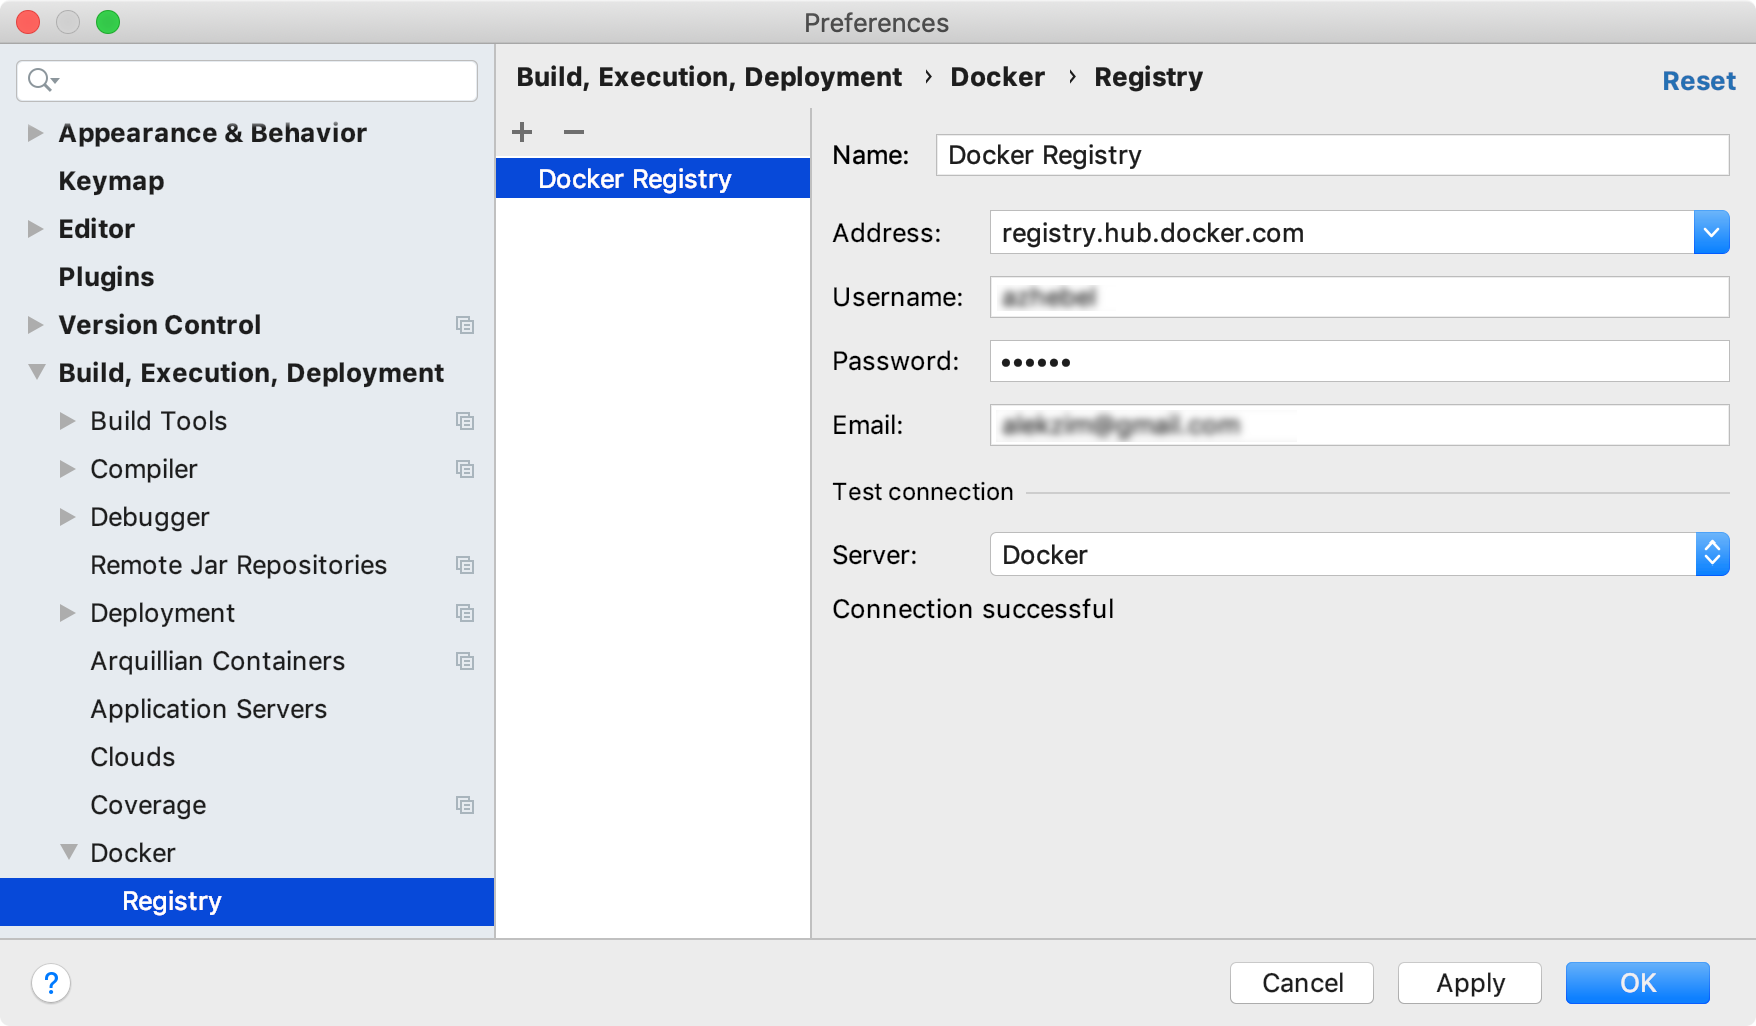 The Docker Registry dialog